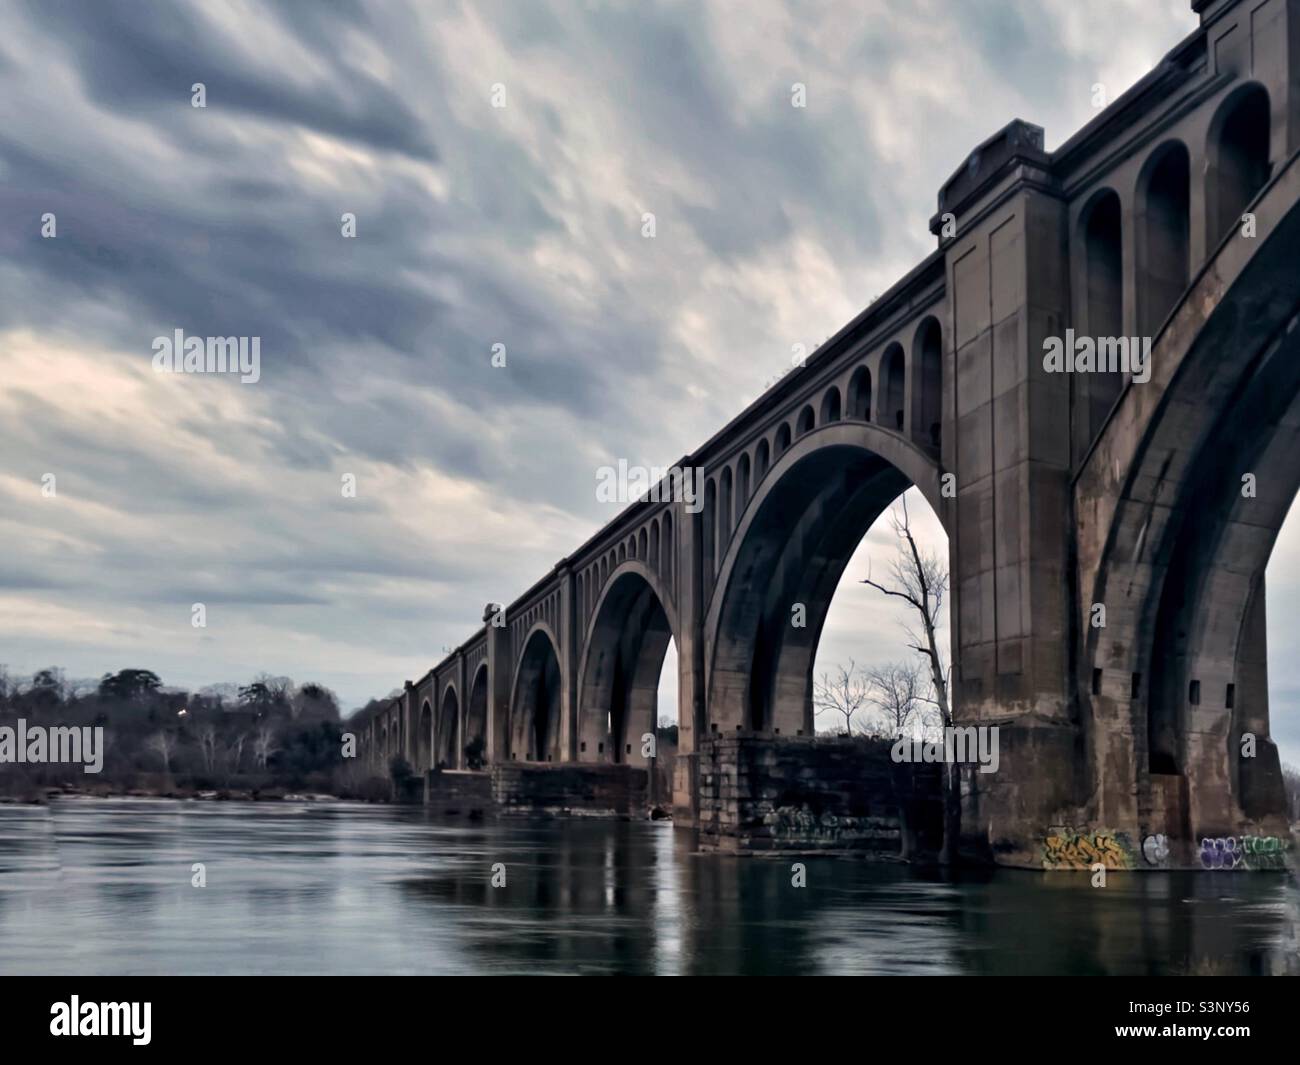 Th Atlantic Coastline Bridge across the James River in Richmond, VA. Stock Photo